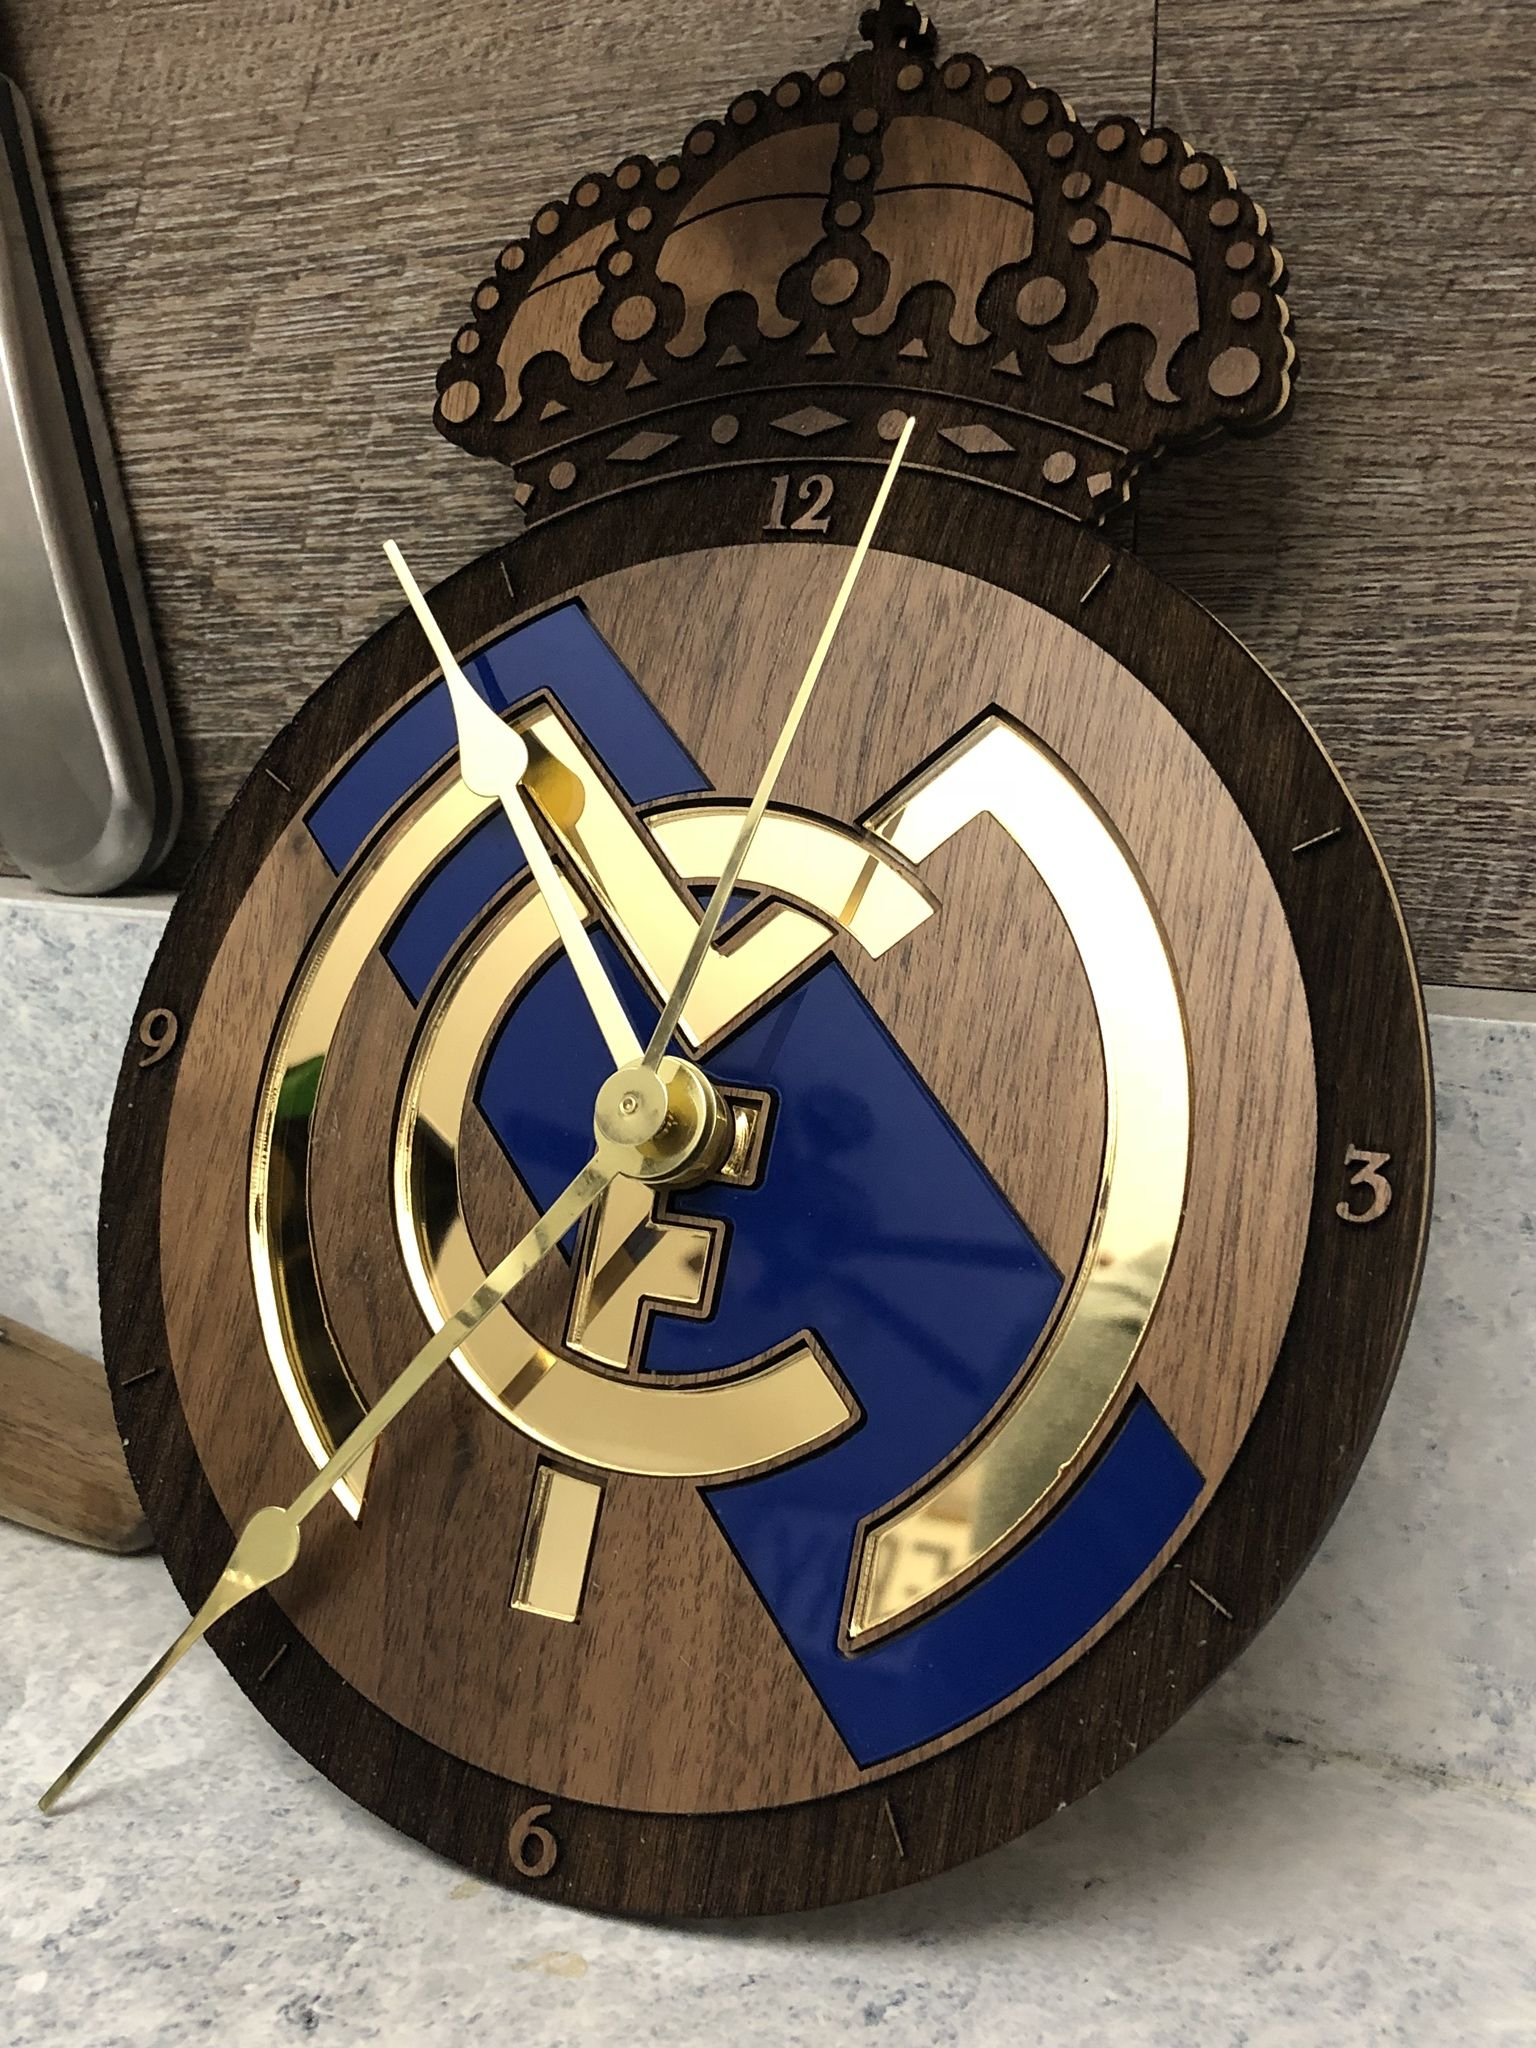 1536x2048 Made a custom Real clock! | Real madrid logo, Real madrid images, Real madrid